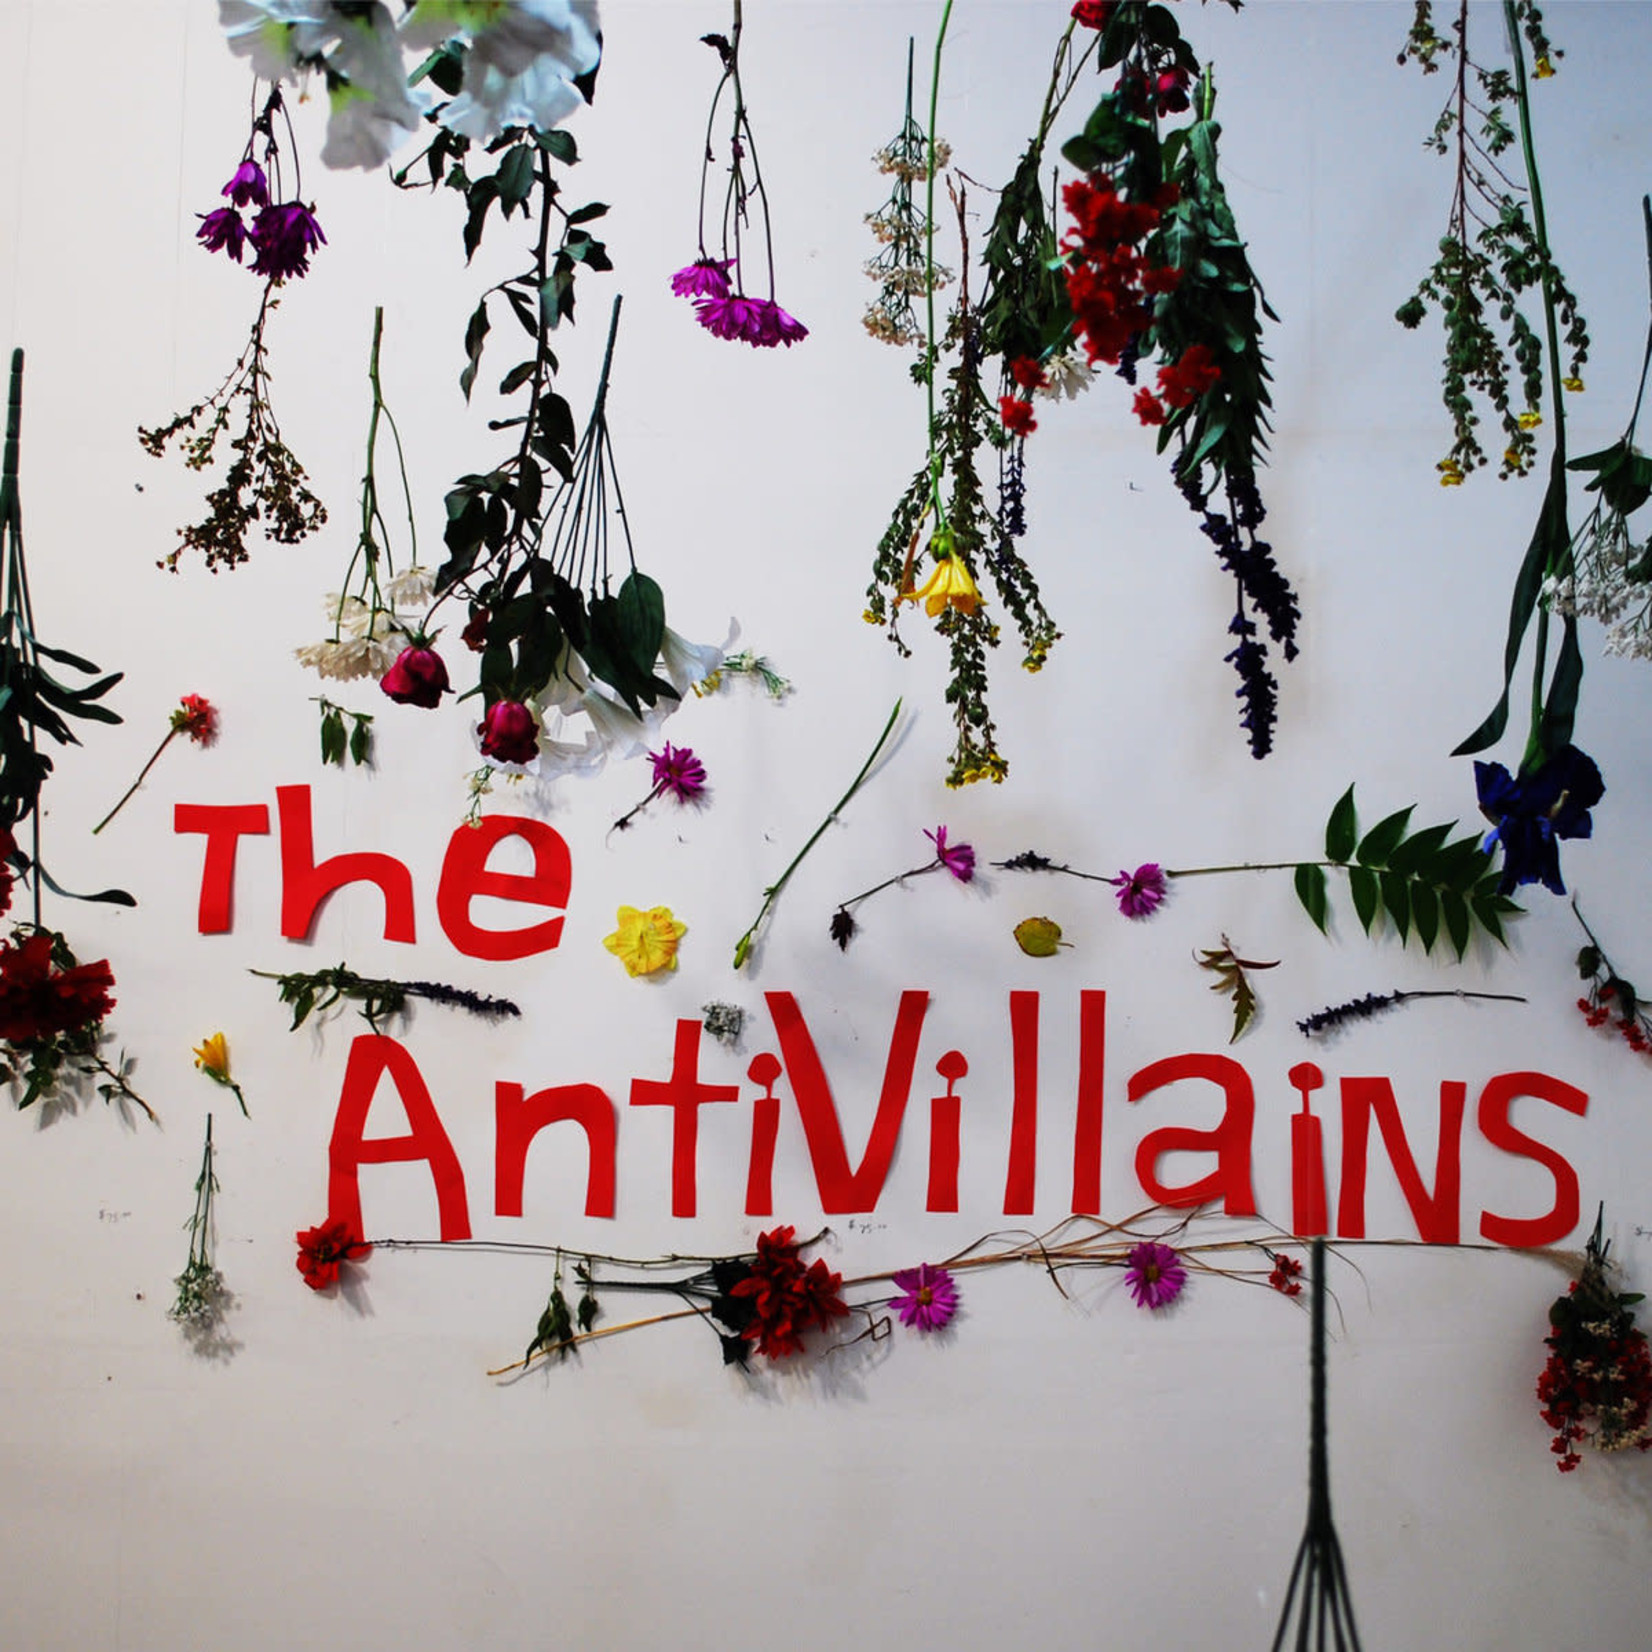 AntiVillains - So Much For Romance (CD) [2009]